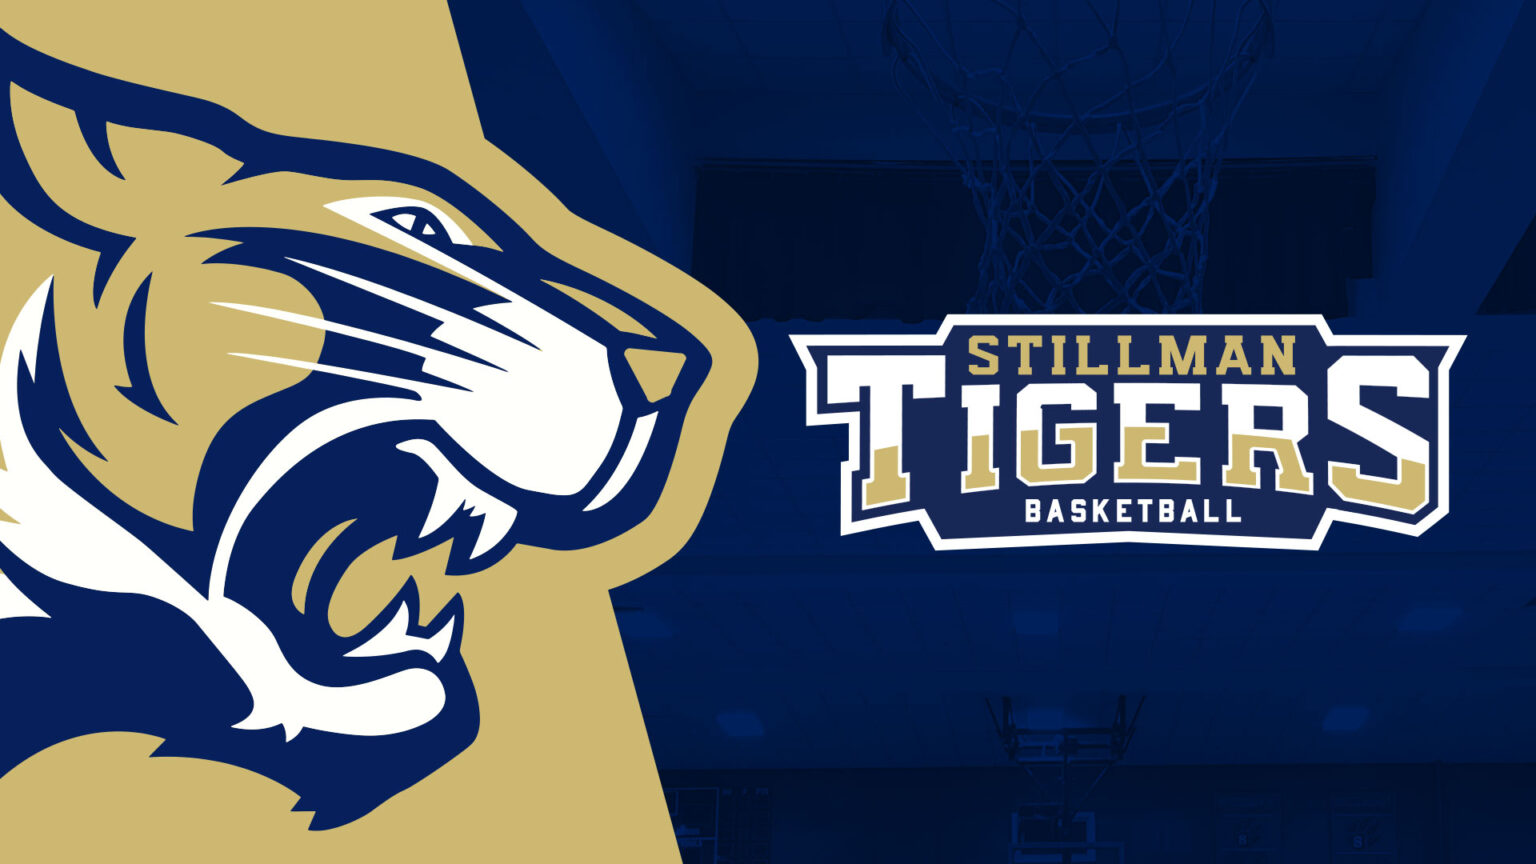 Stillman Tigers Basketmall 1920x1080